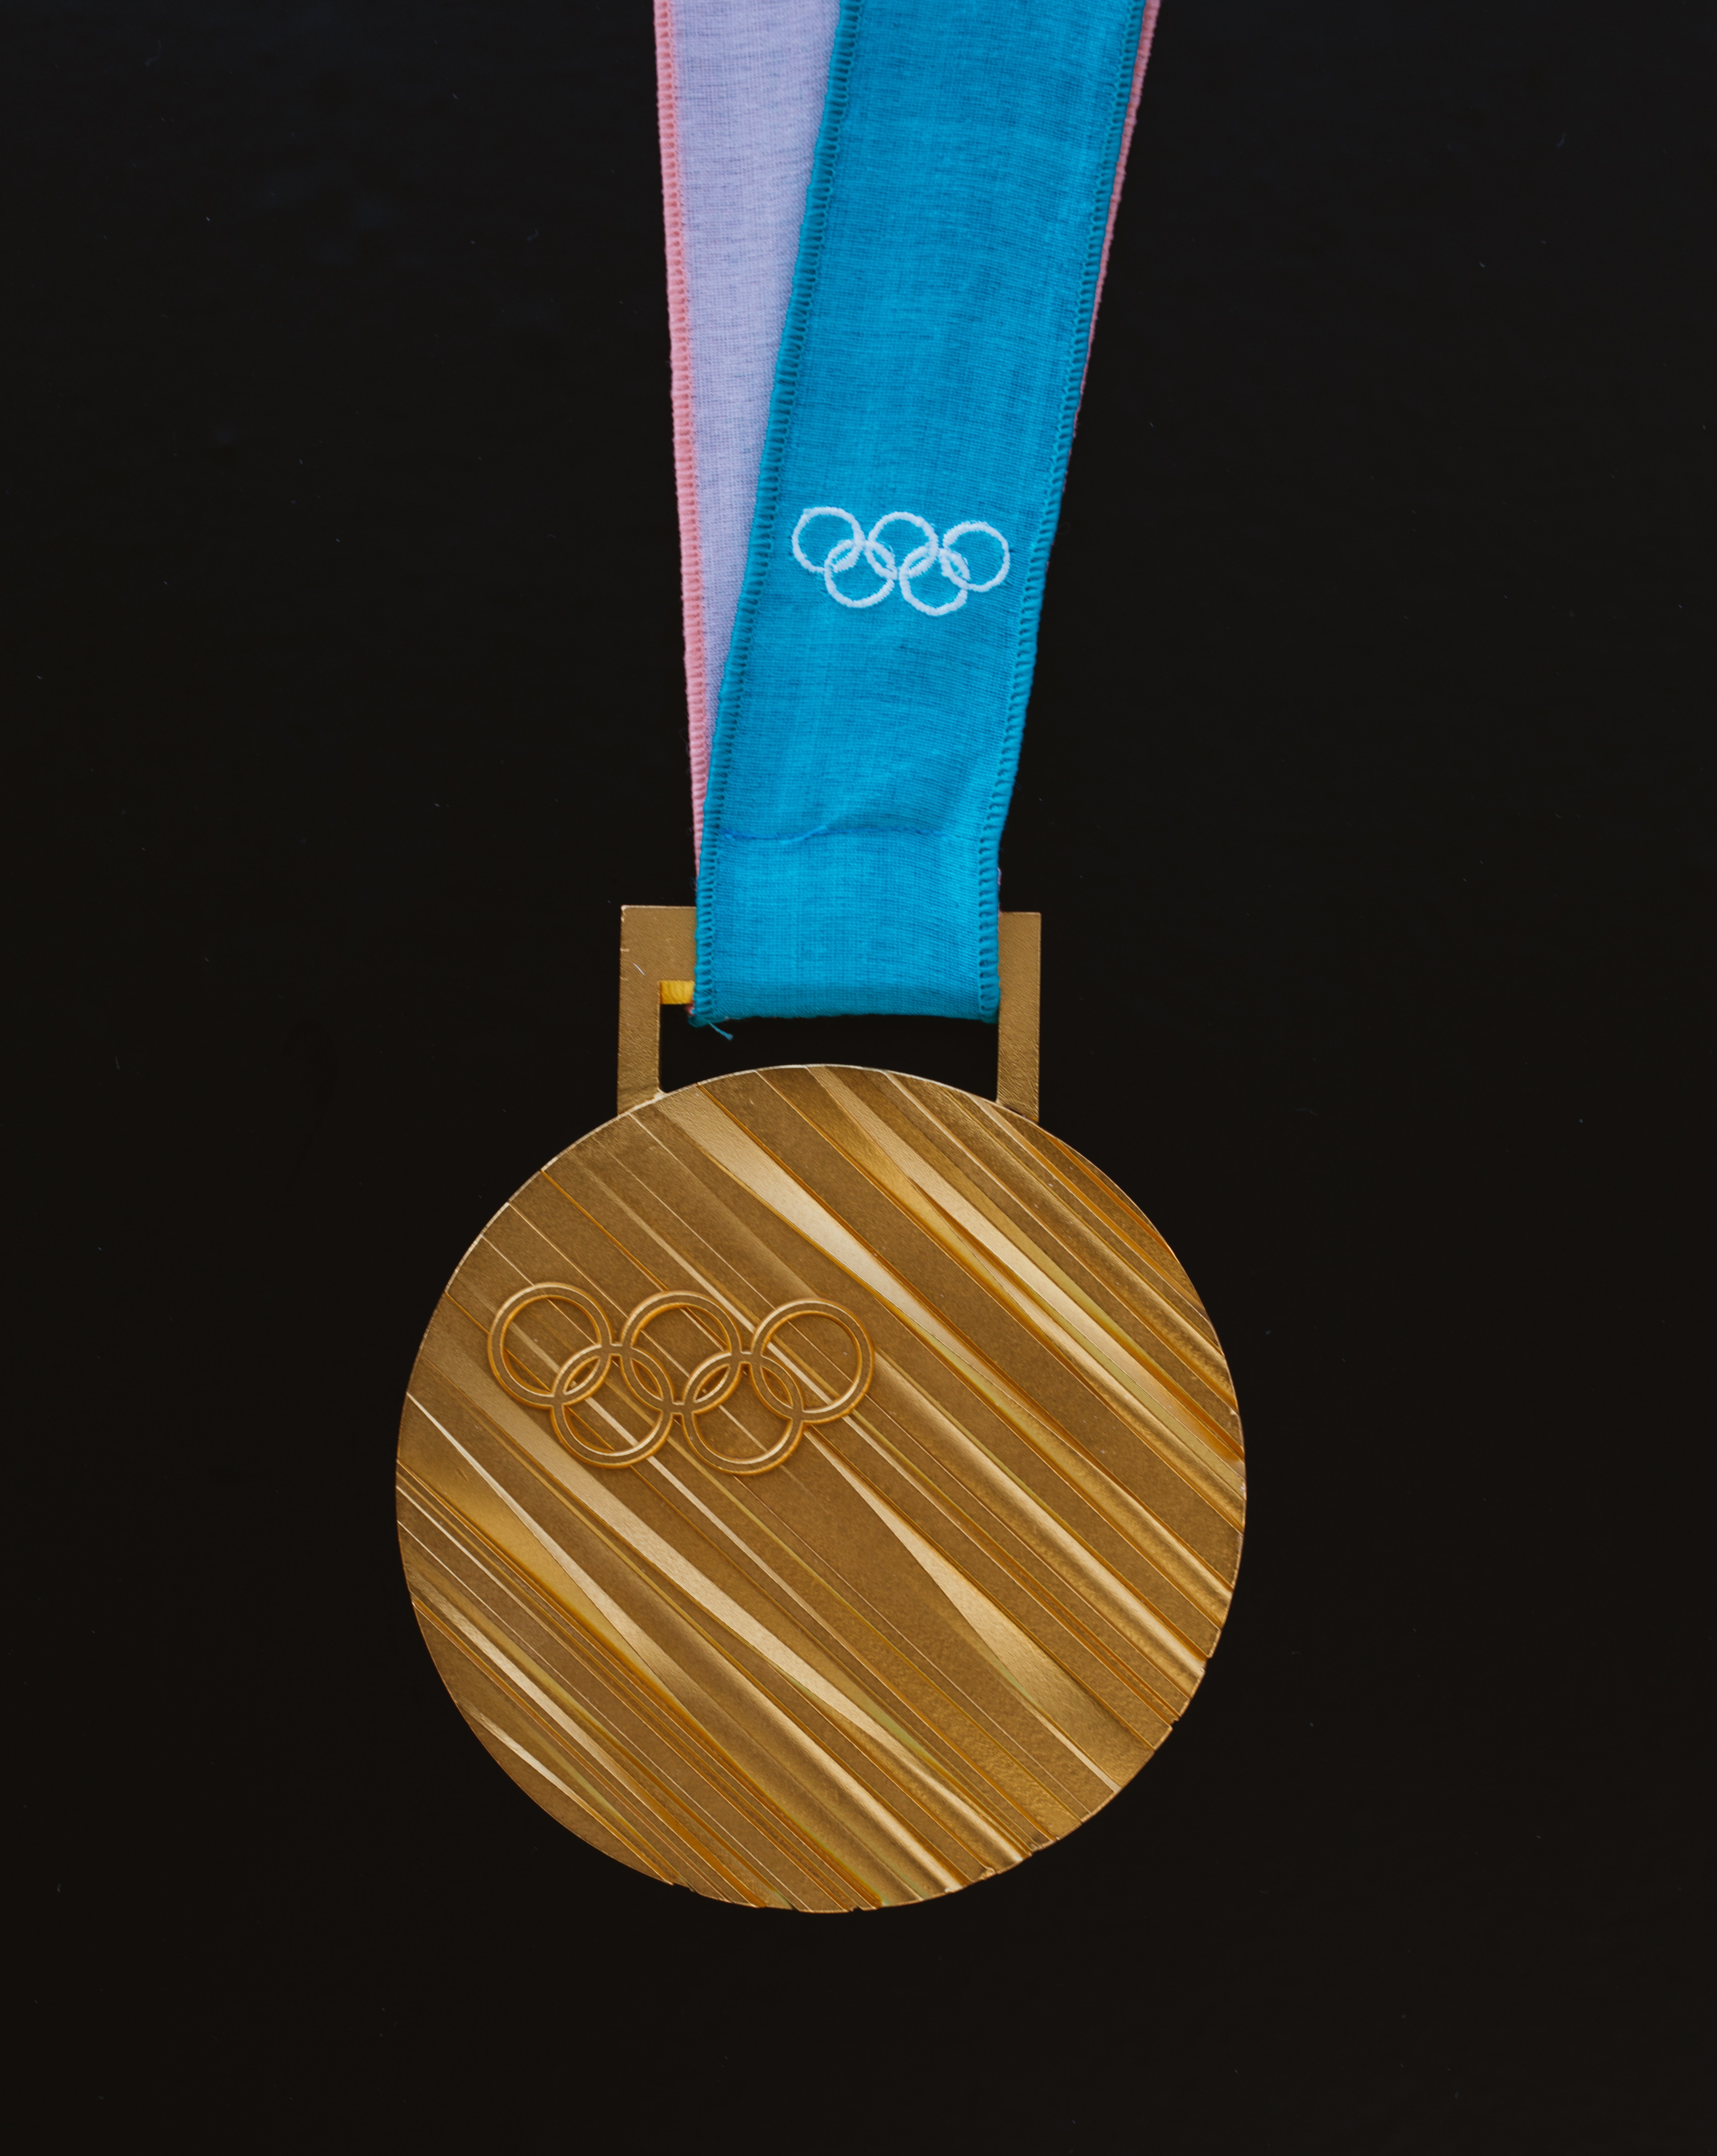 alt="olympic gold medal"